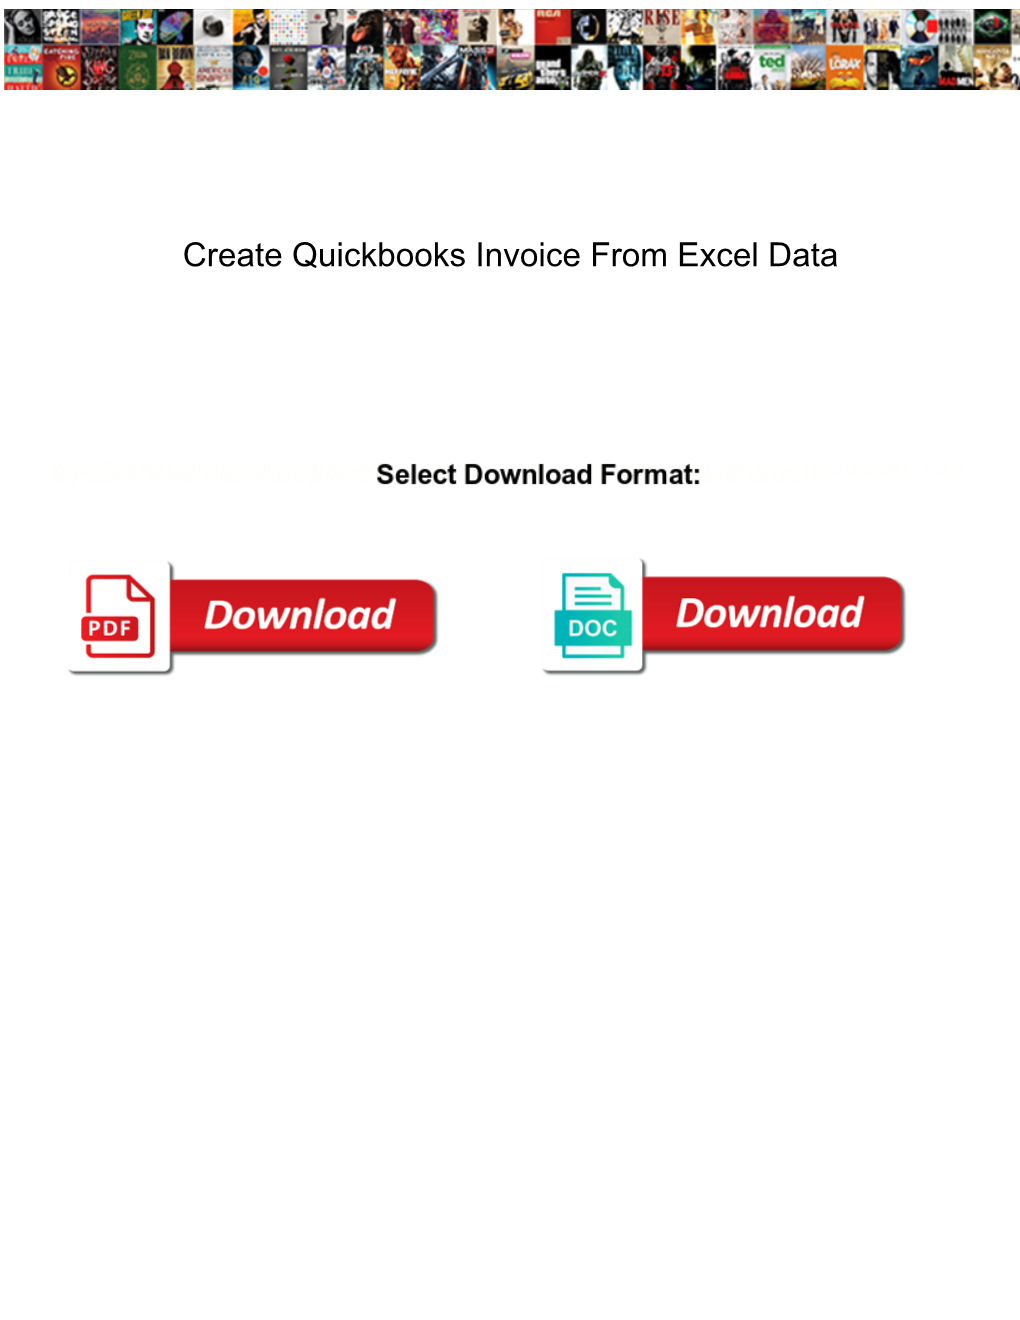 Create Quickbooks Invoice from Excel Data